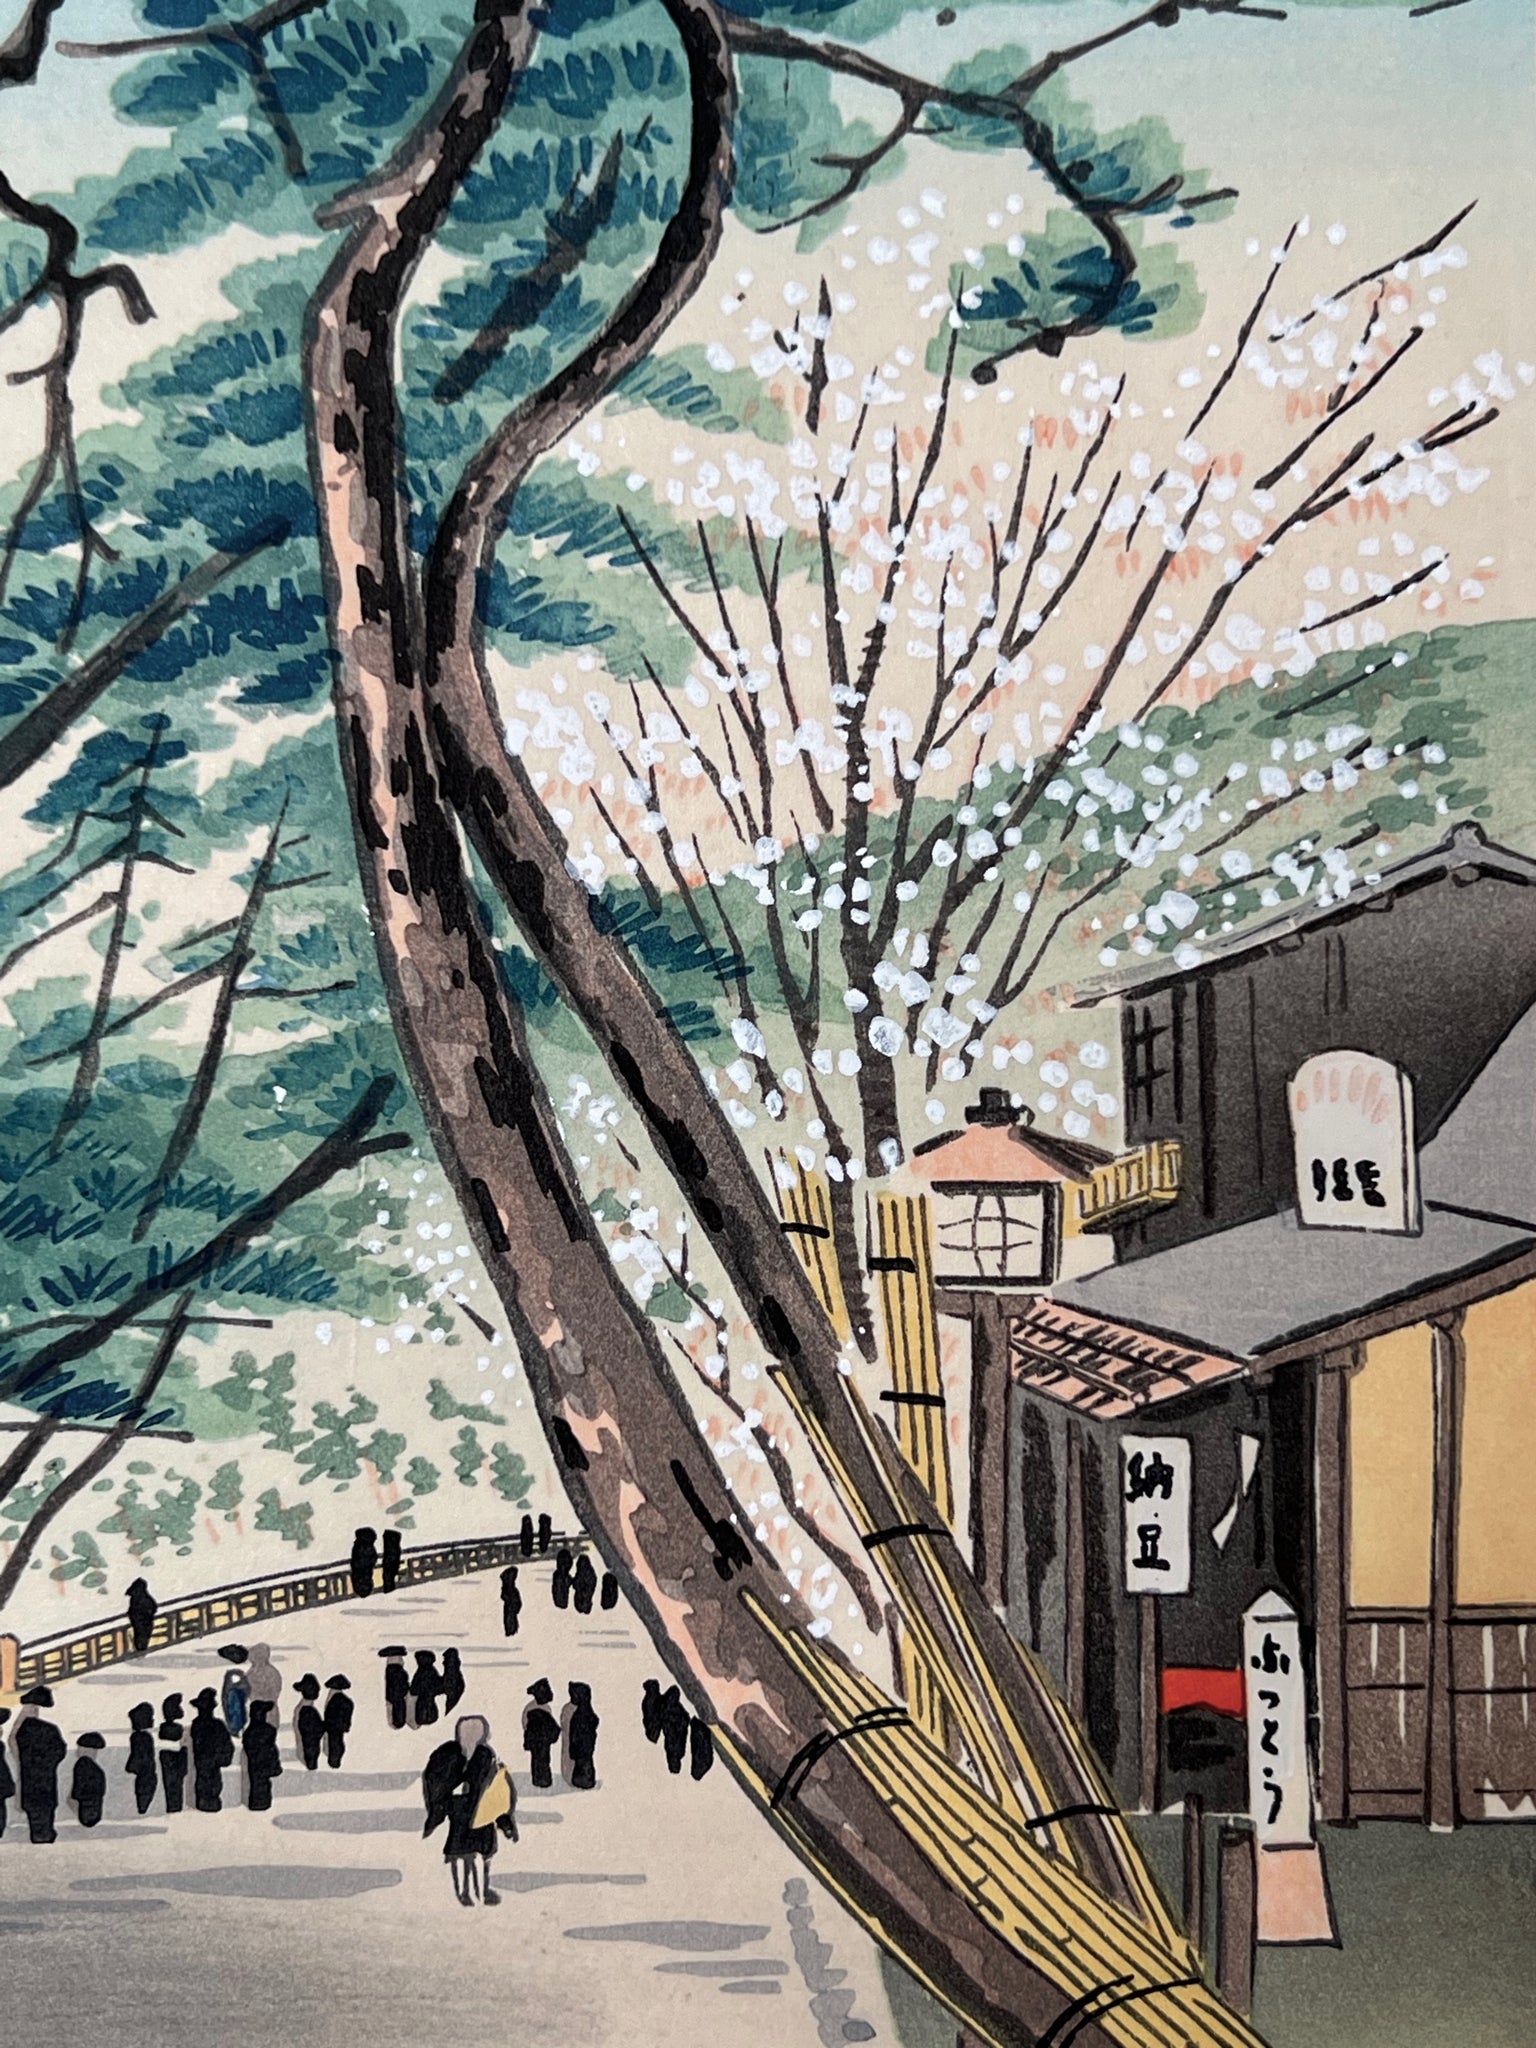 Estampe Japonaise de Tokuriki Tomikichiro | Série des 12 mois à Kyoto, avril, prunier en fleurs , arashiyama